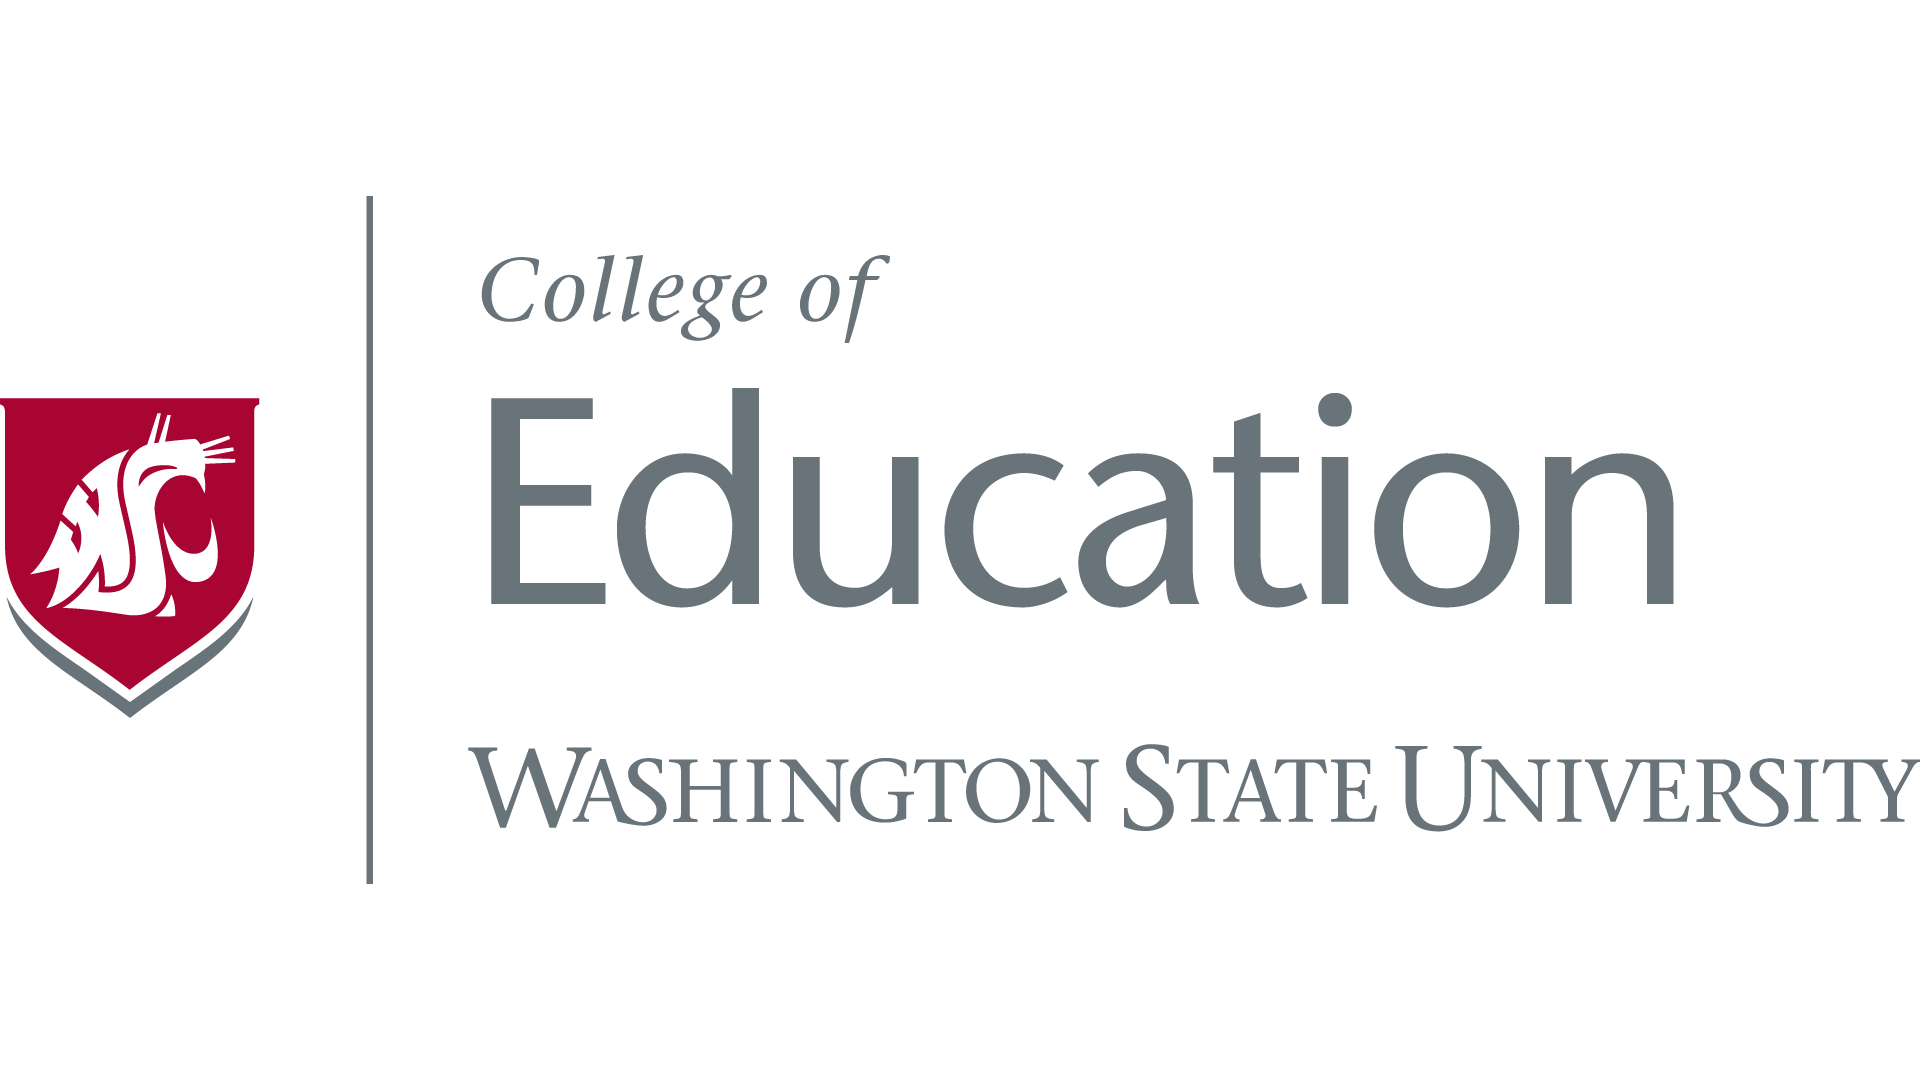 College of Education WSU Logo